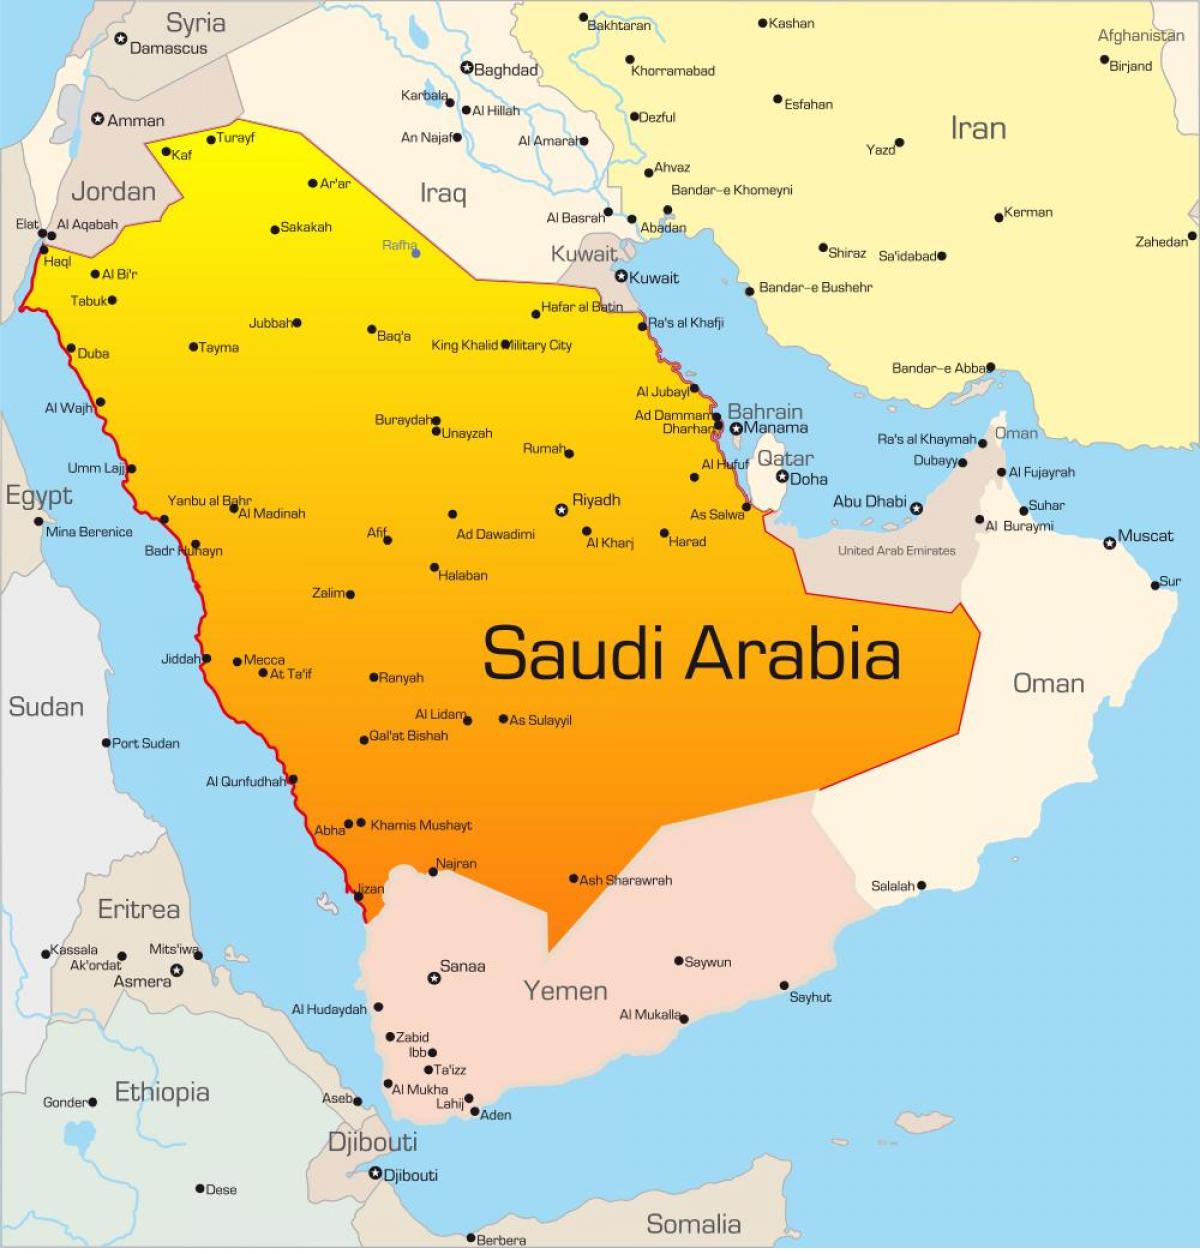 La meca, arabia saudita mapa